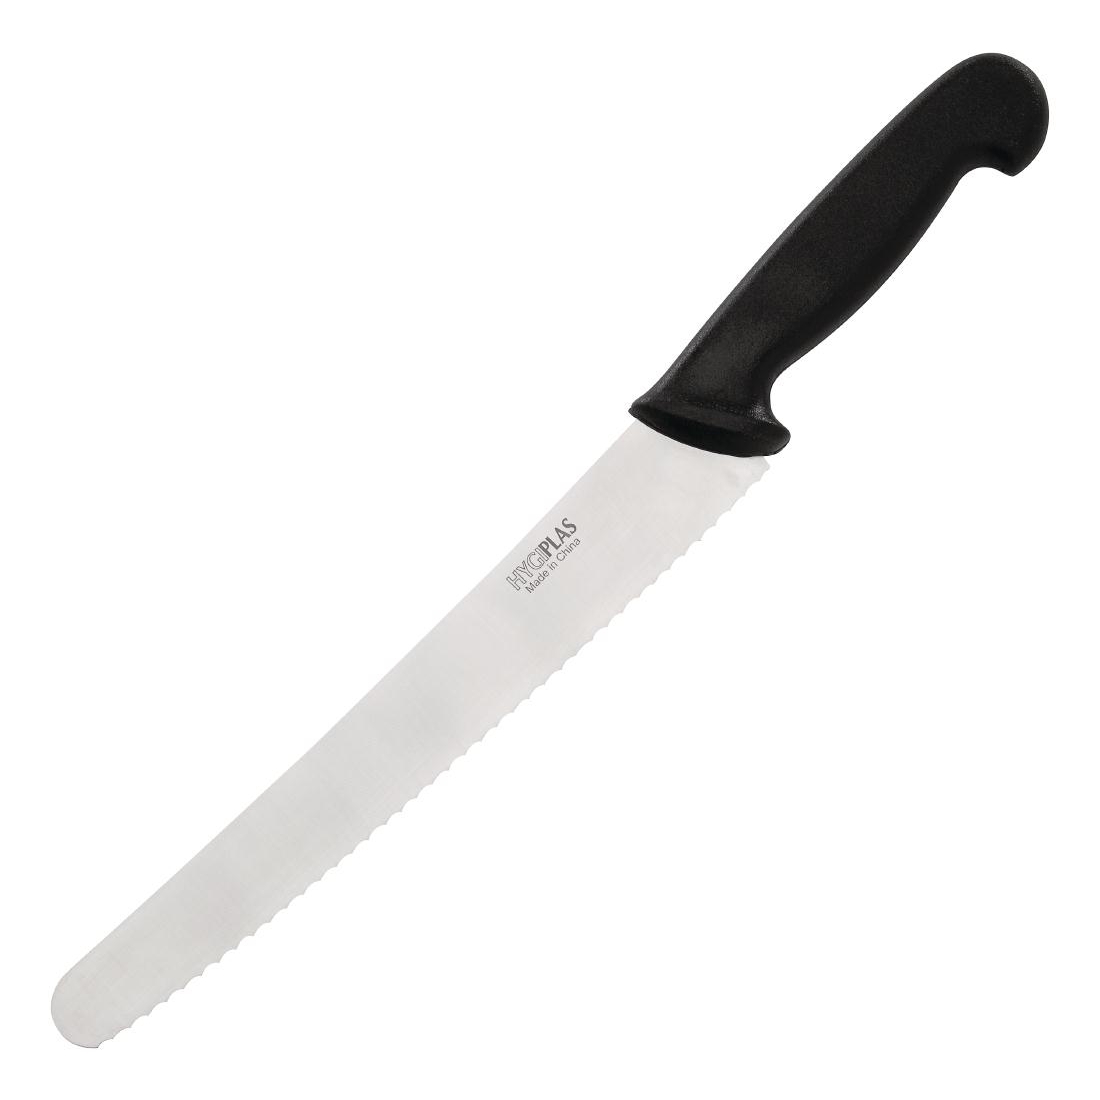 Hygiplas Serrated Pastry Knife Black 25.5cm